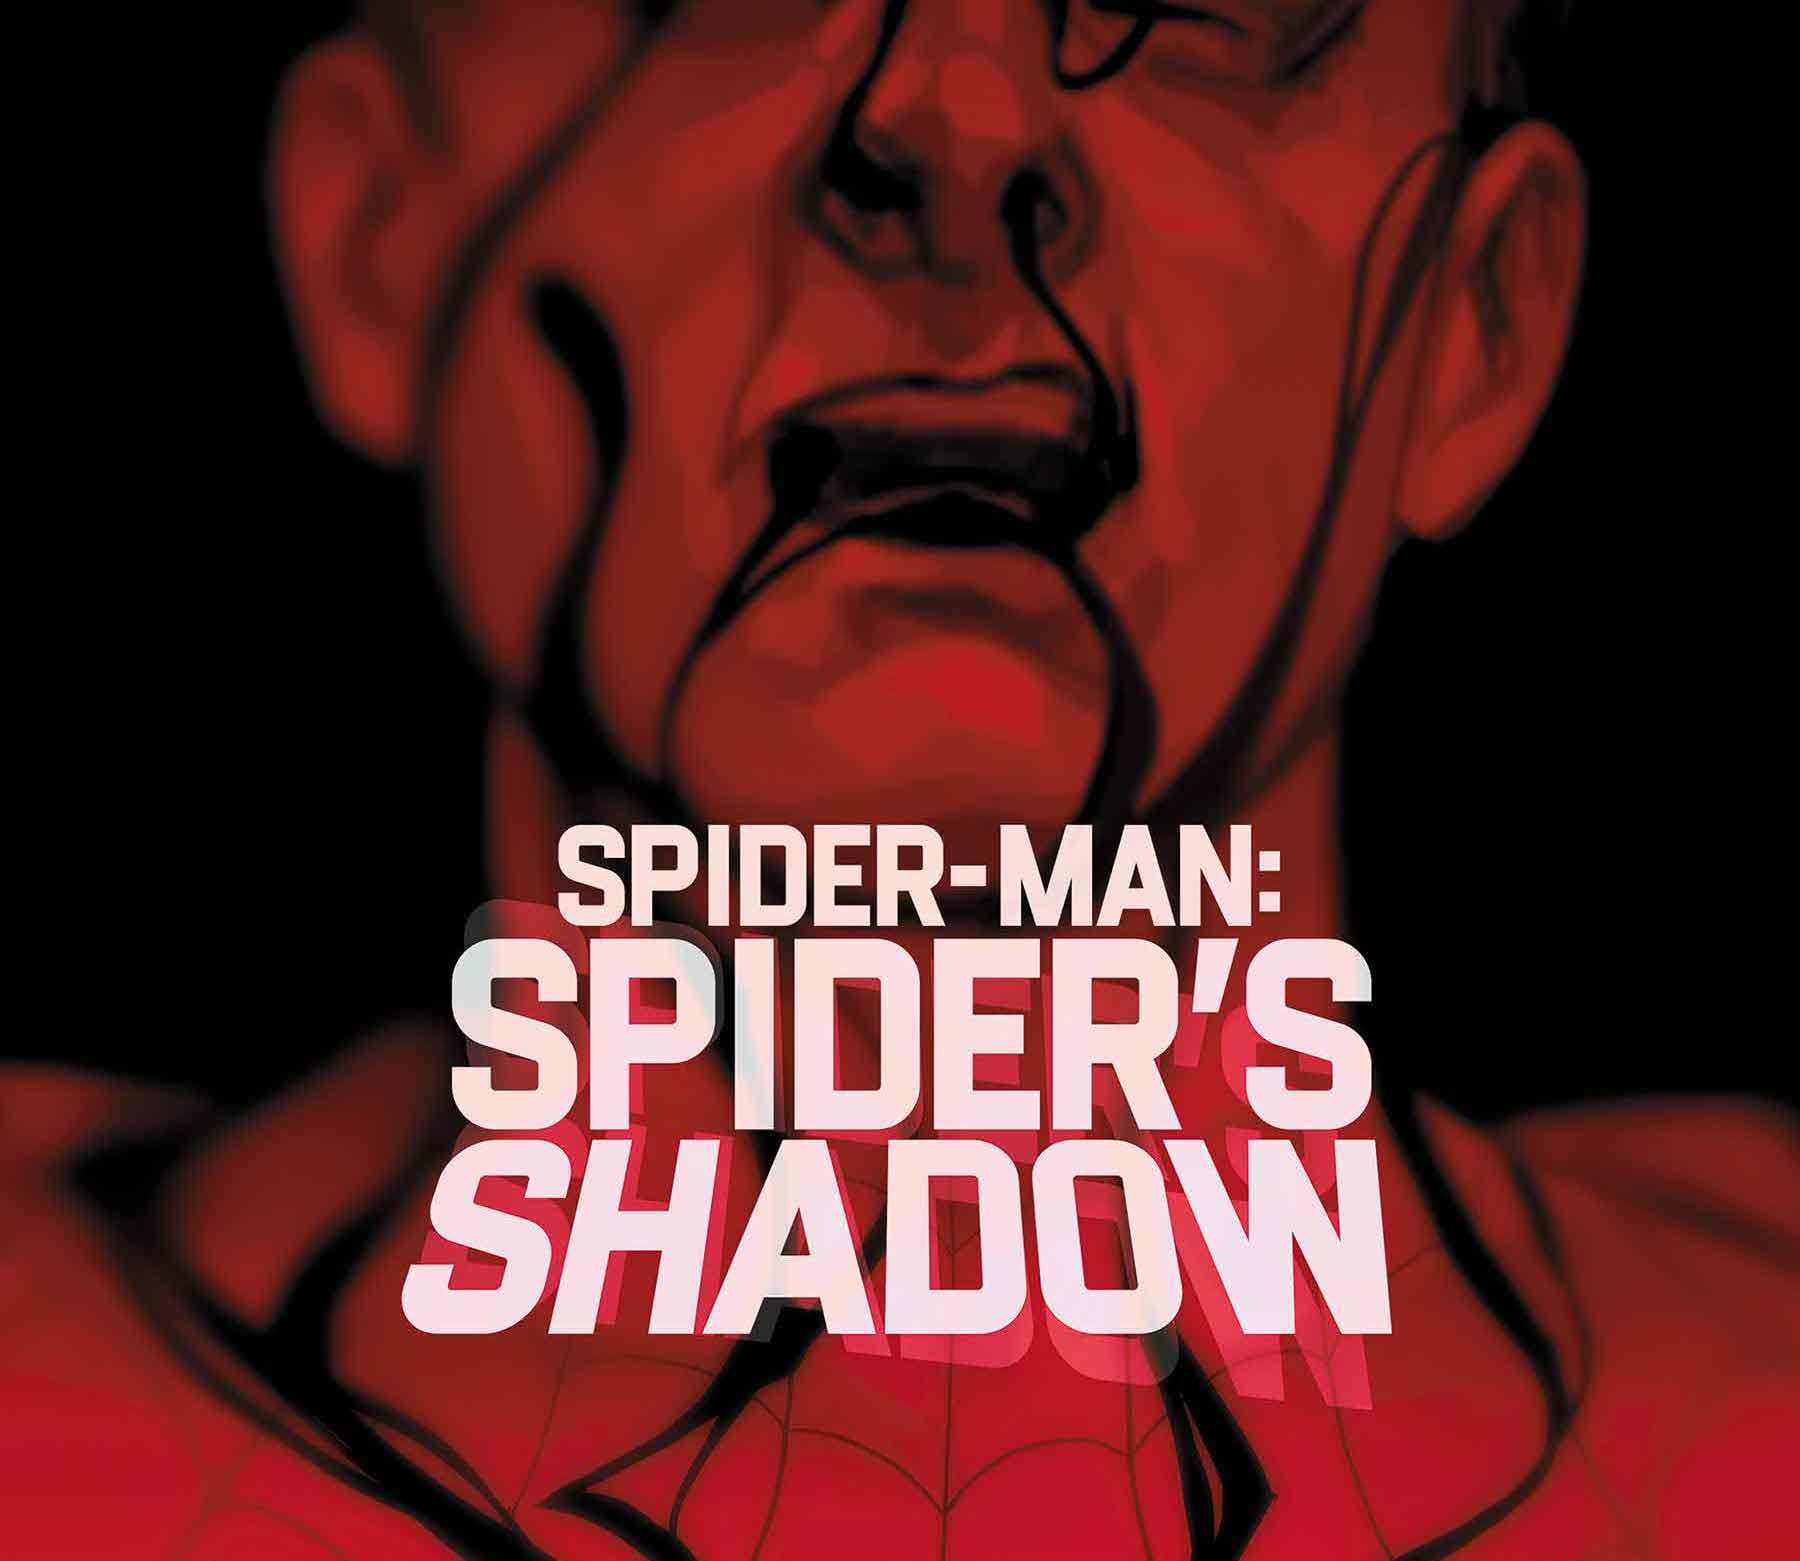 'Spider-Man: Spider’s Shadow' #1 review: a dark web we weave